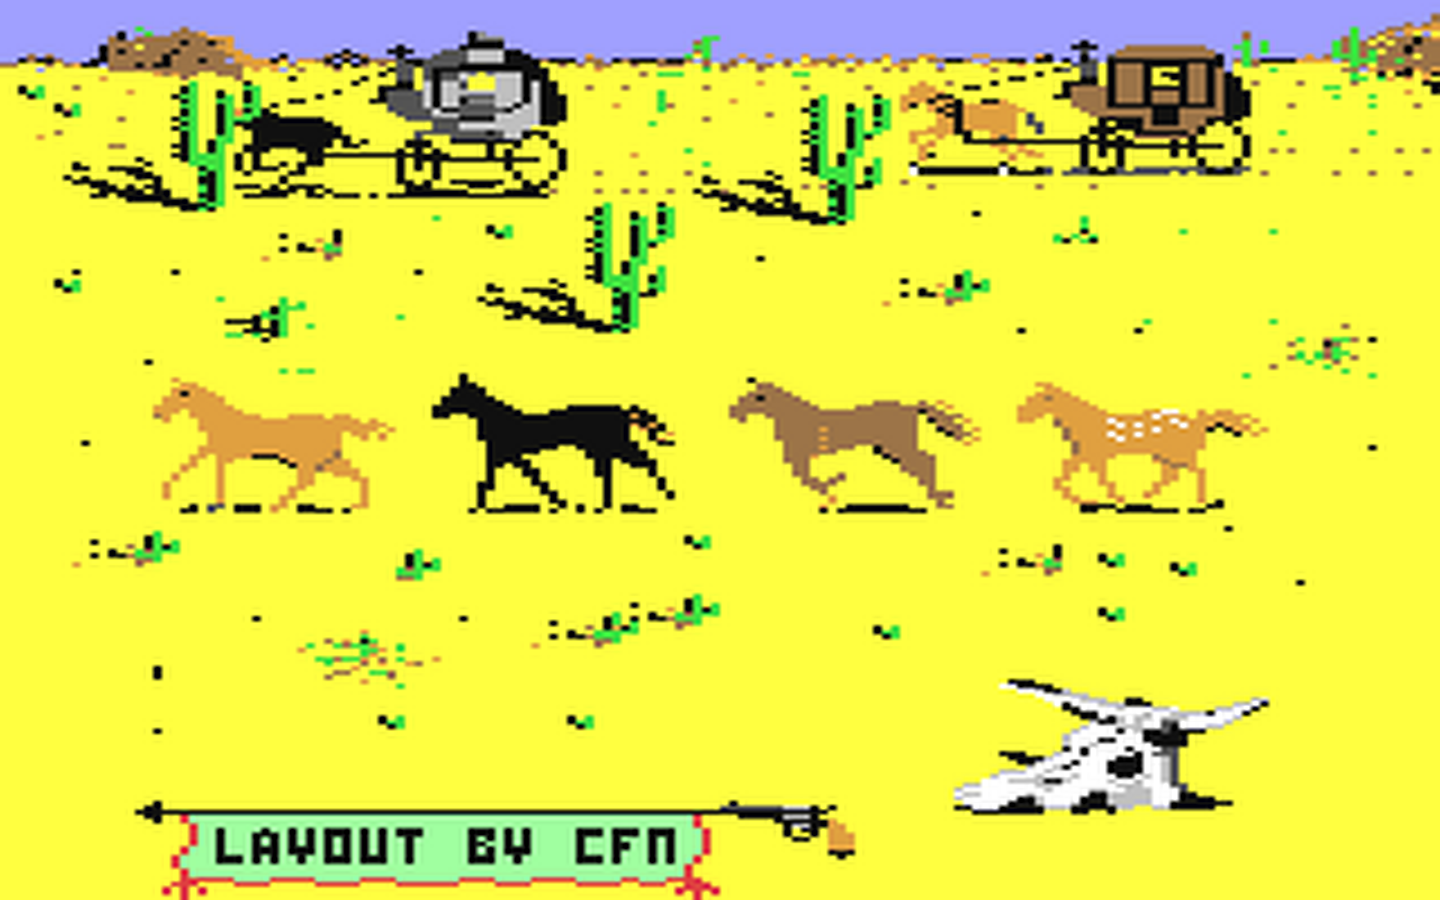 C64 GameBase Wild_West Ariolasoft 1985